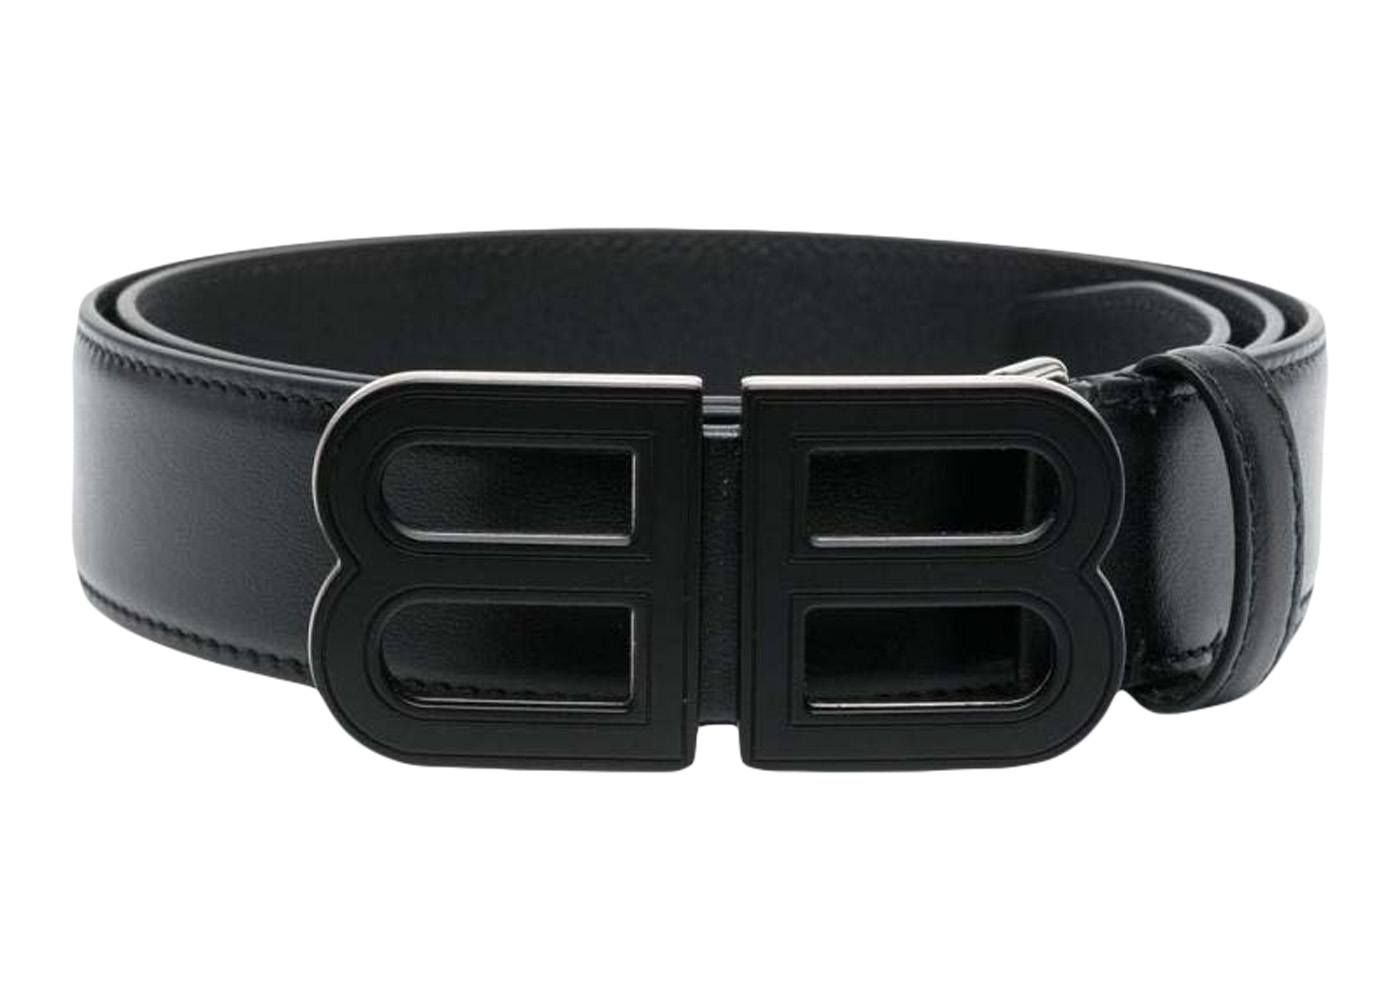 Bally logo-buckle belt - Black